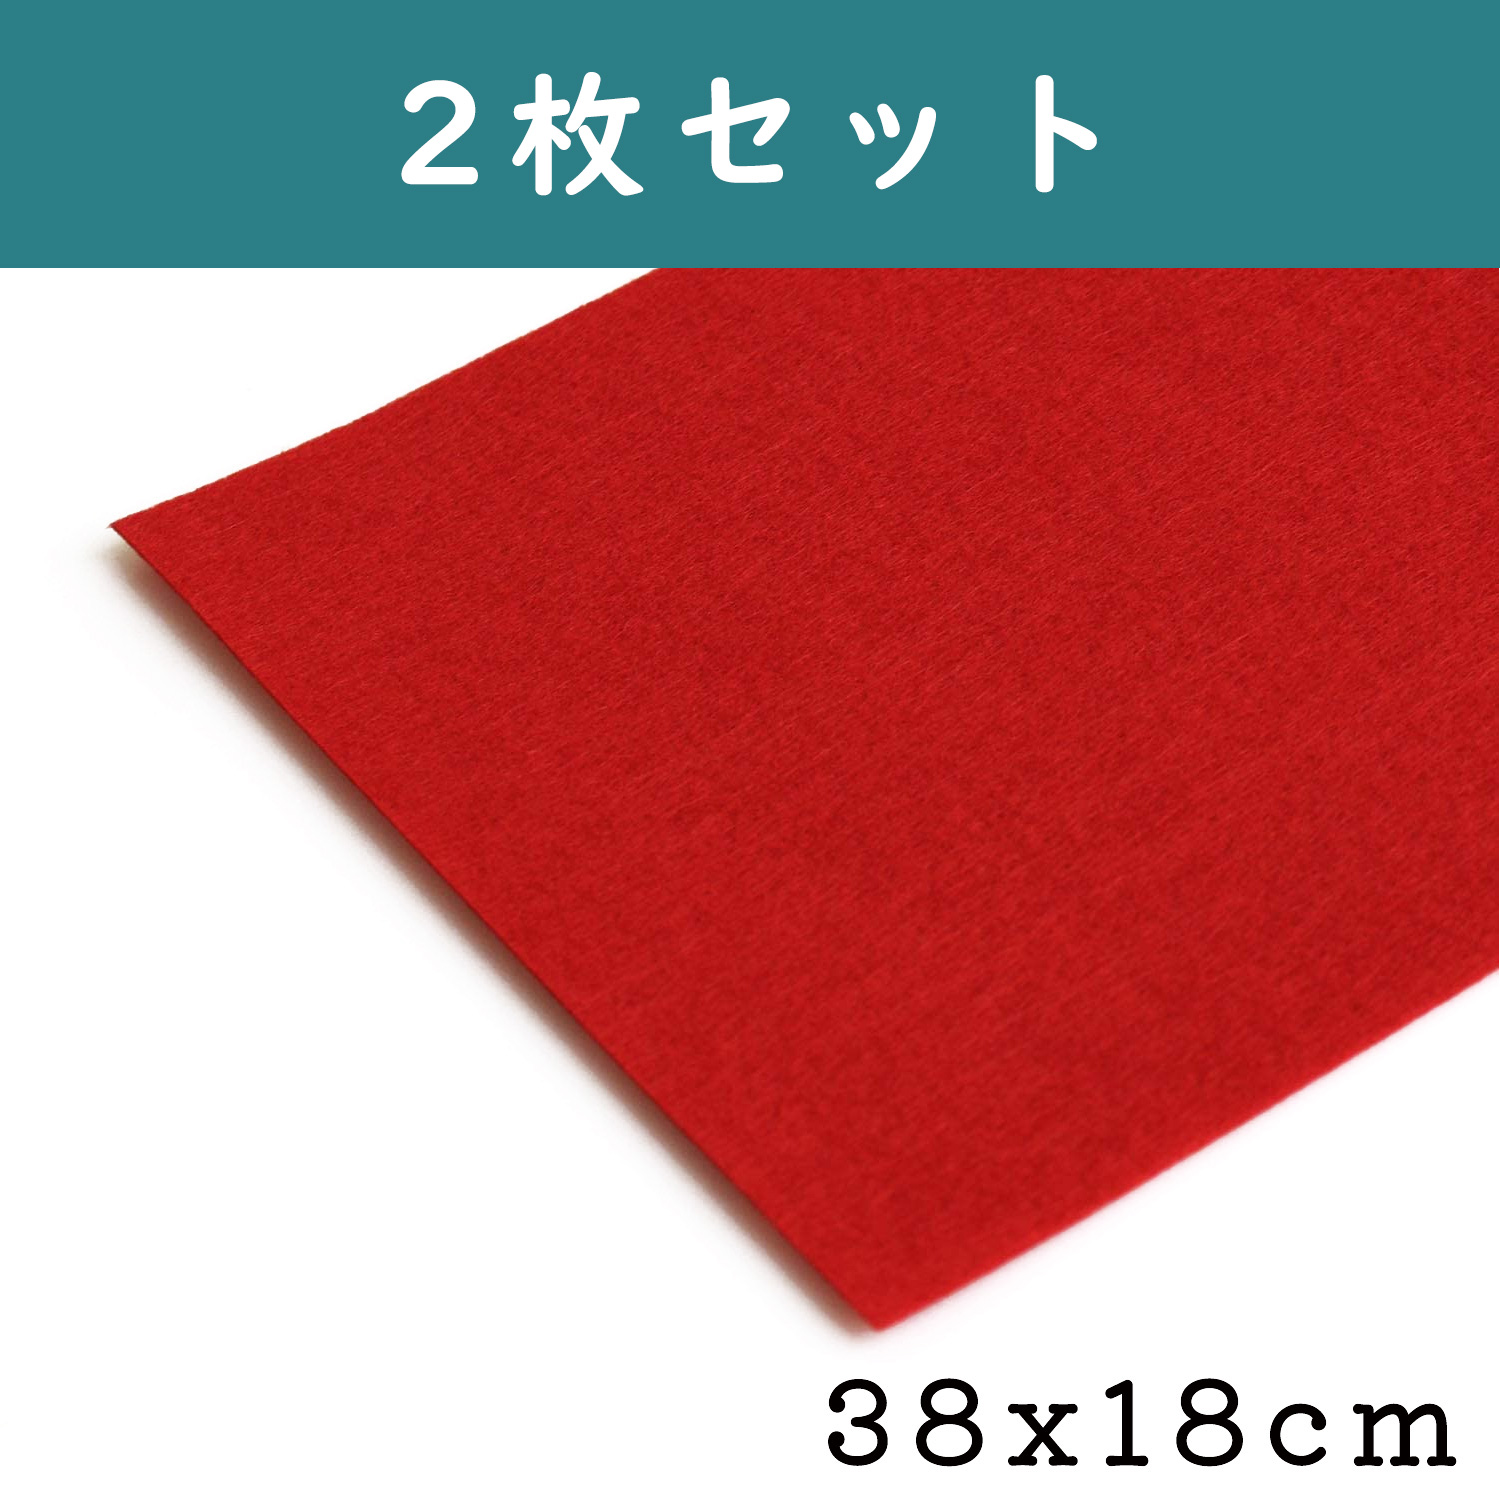 MOU1-2　Red cloth, for Hina Matsuri Decorations 38x18cm　(set)